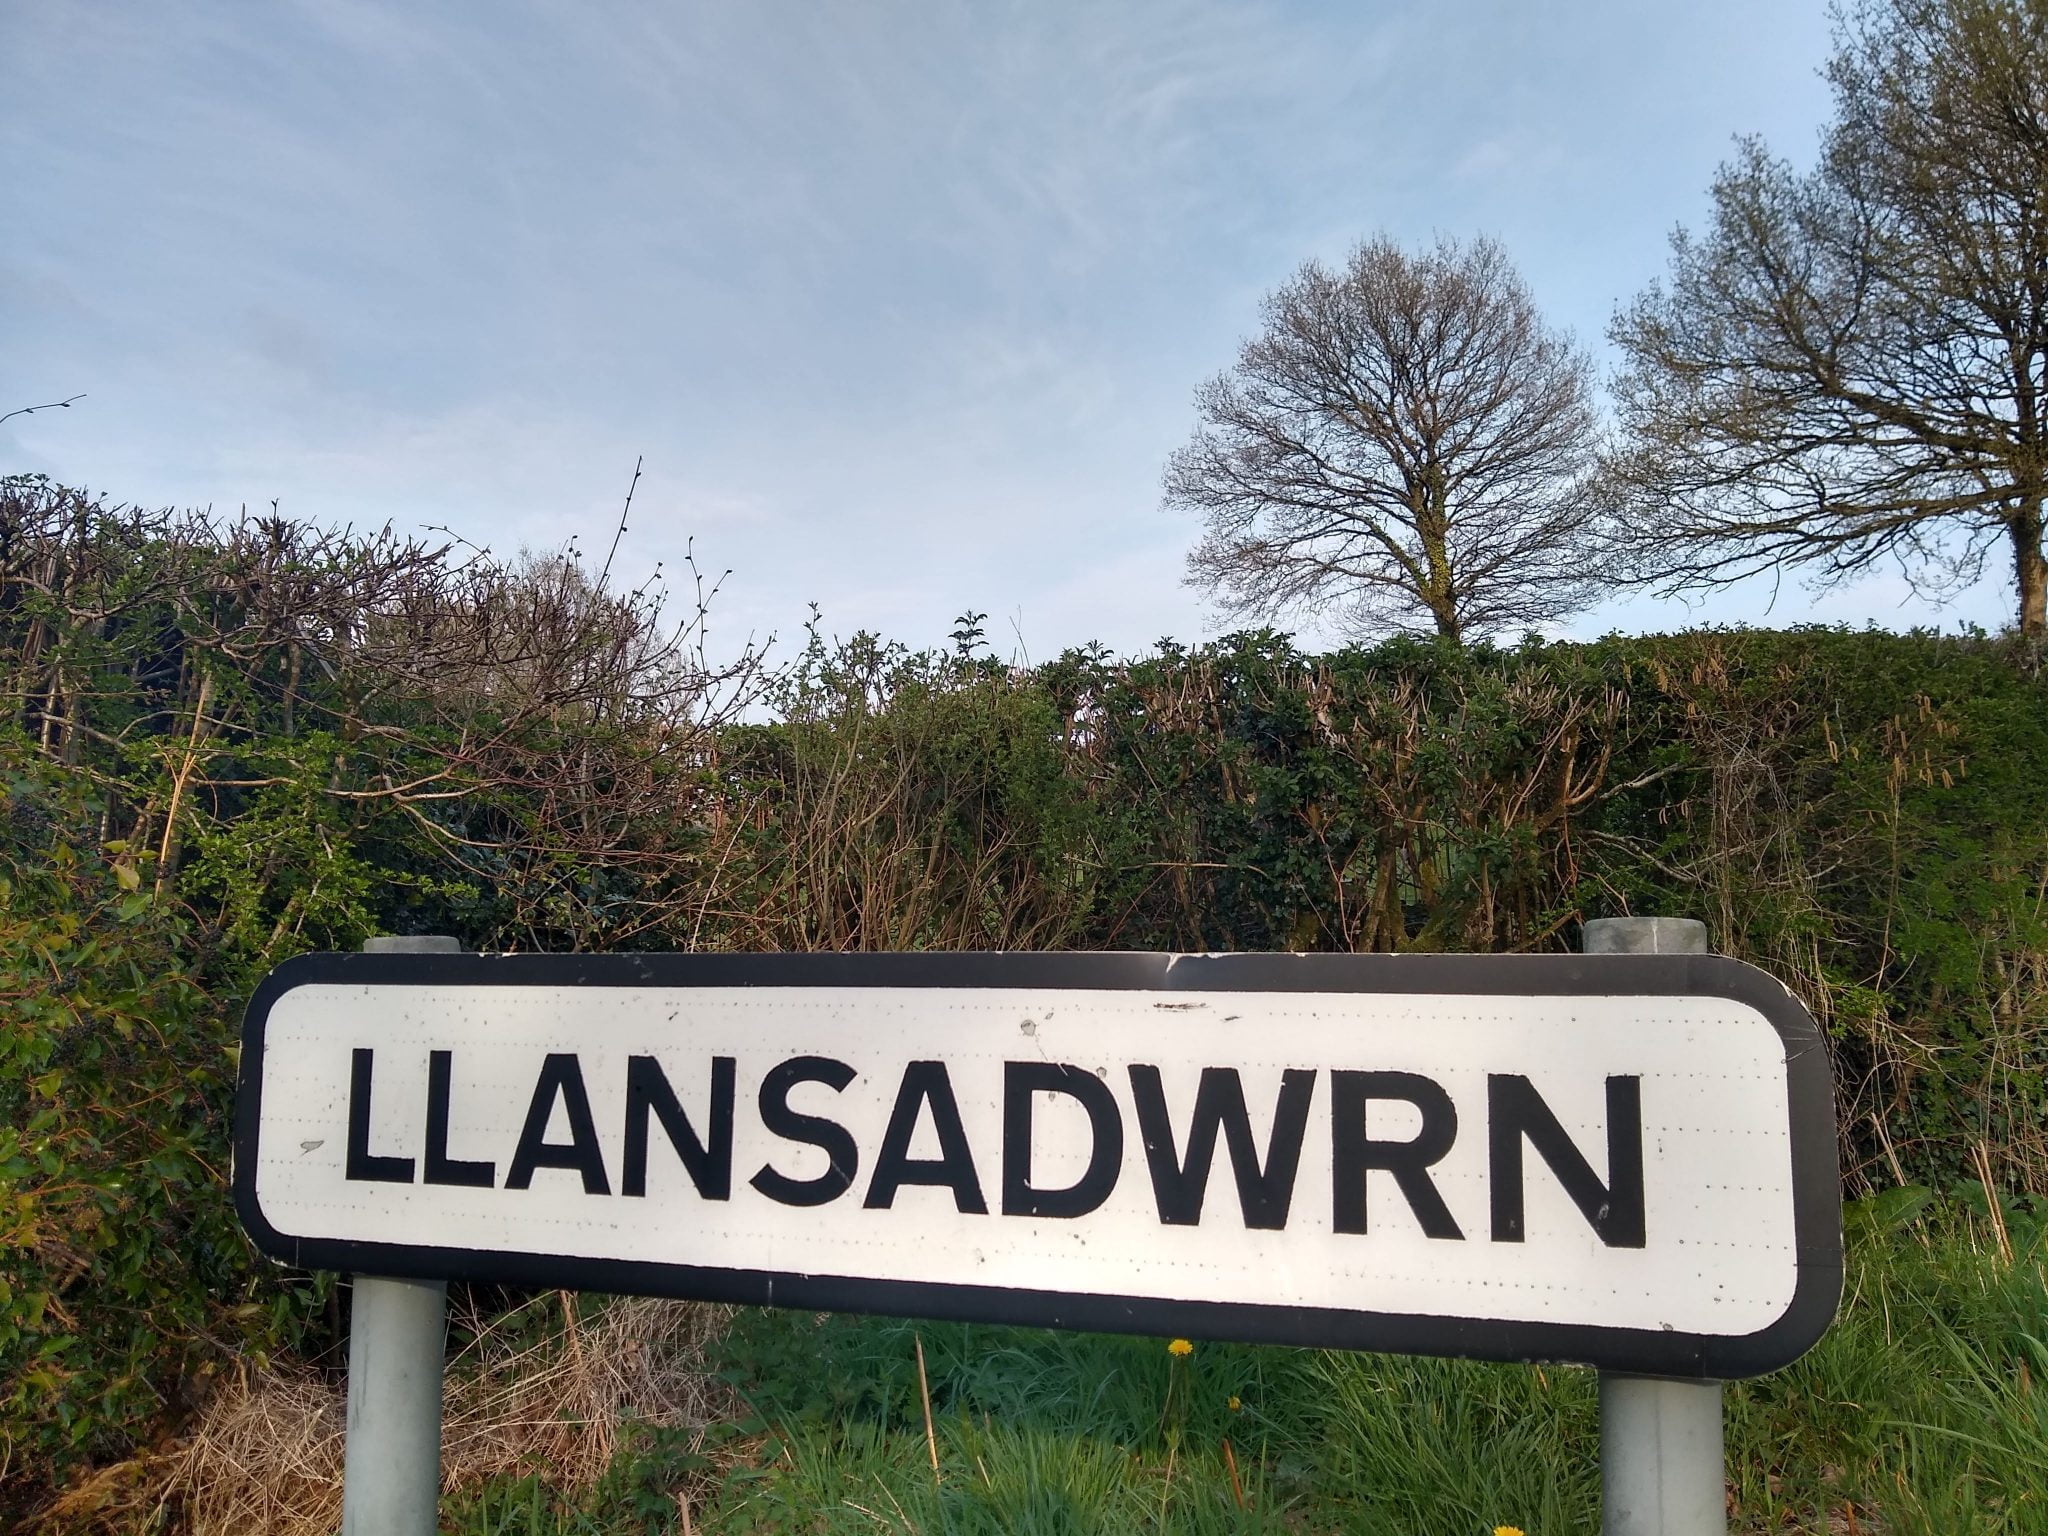 Llansadwrn village sign